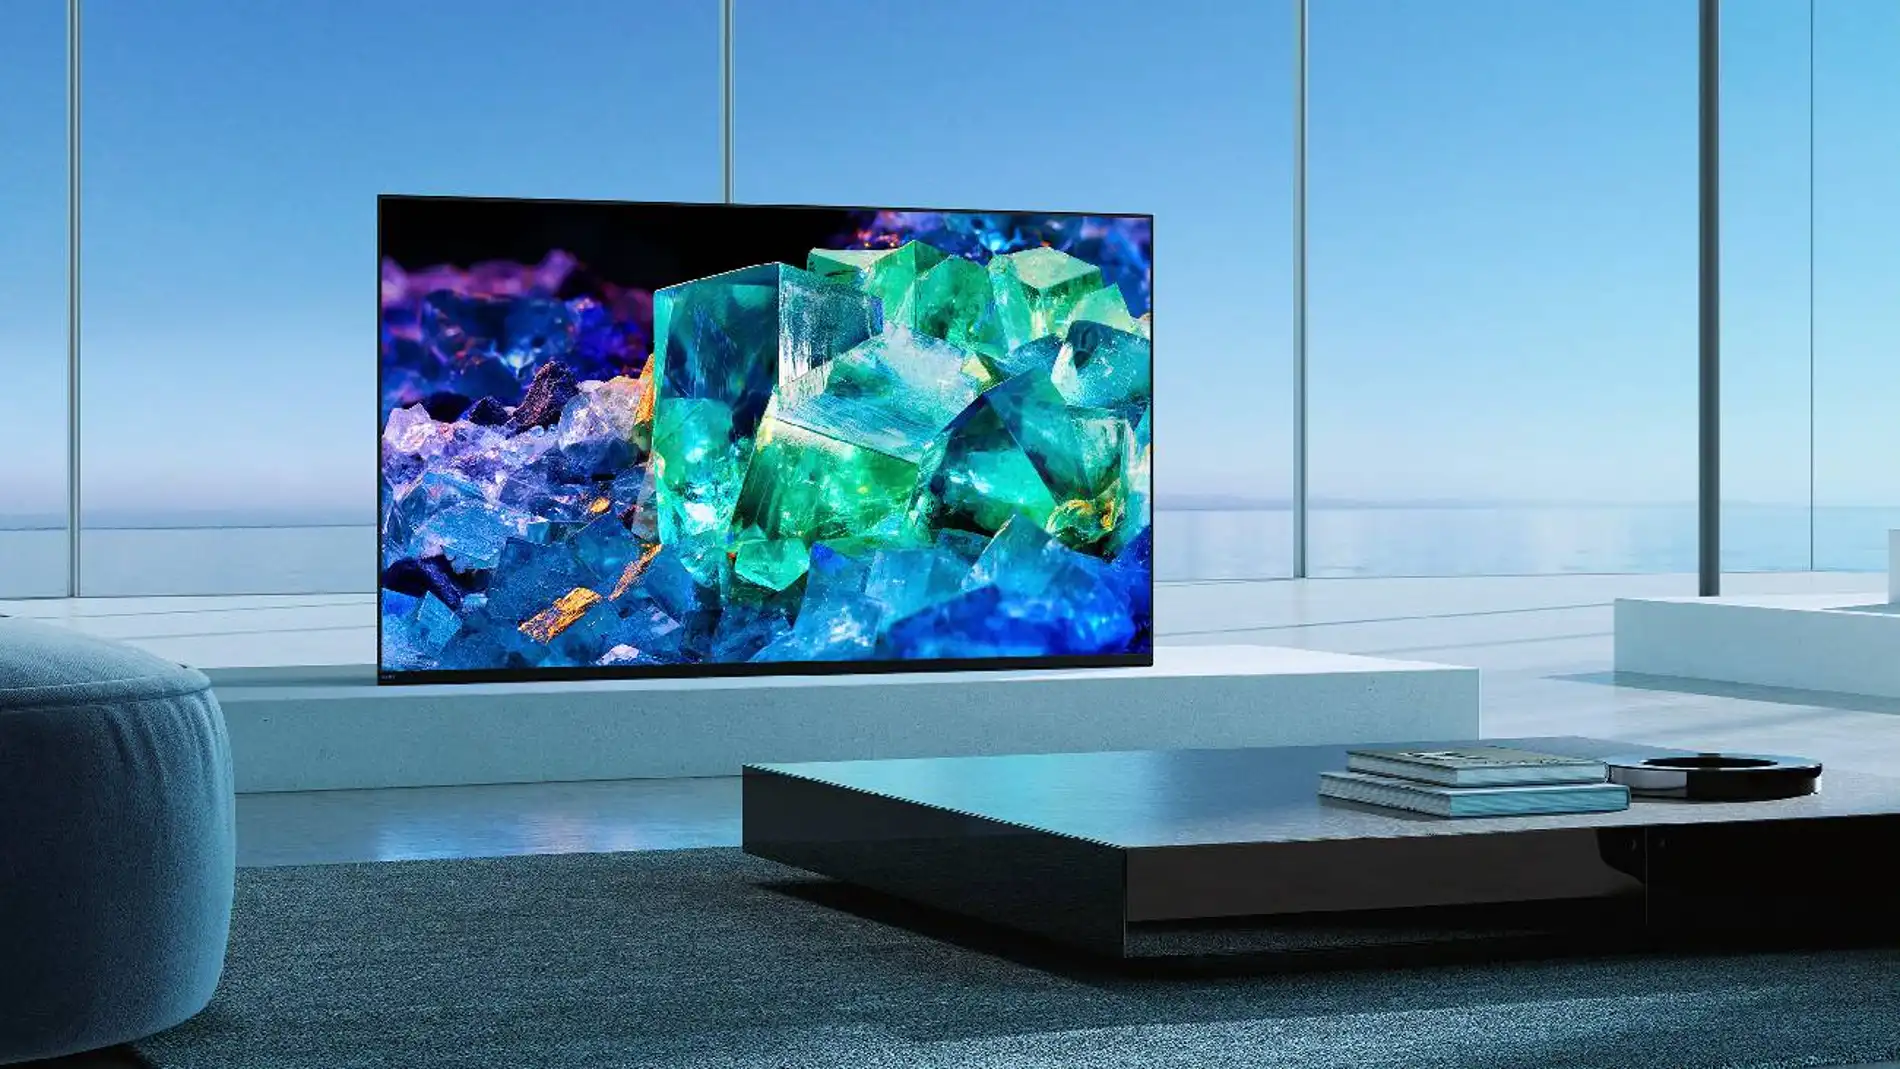 Una Smart TV con Android TV